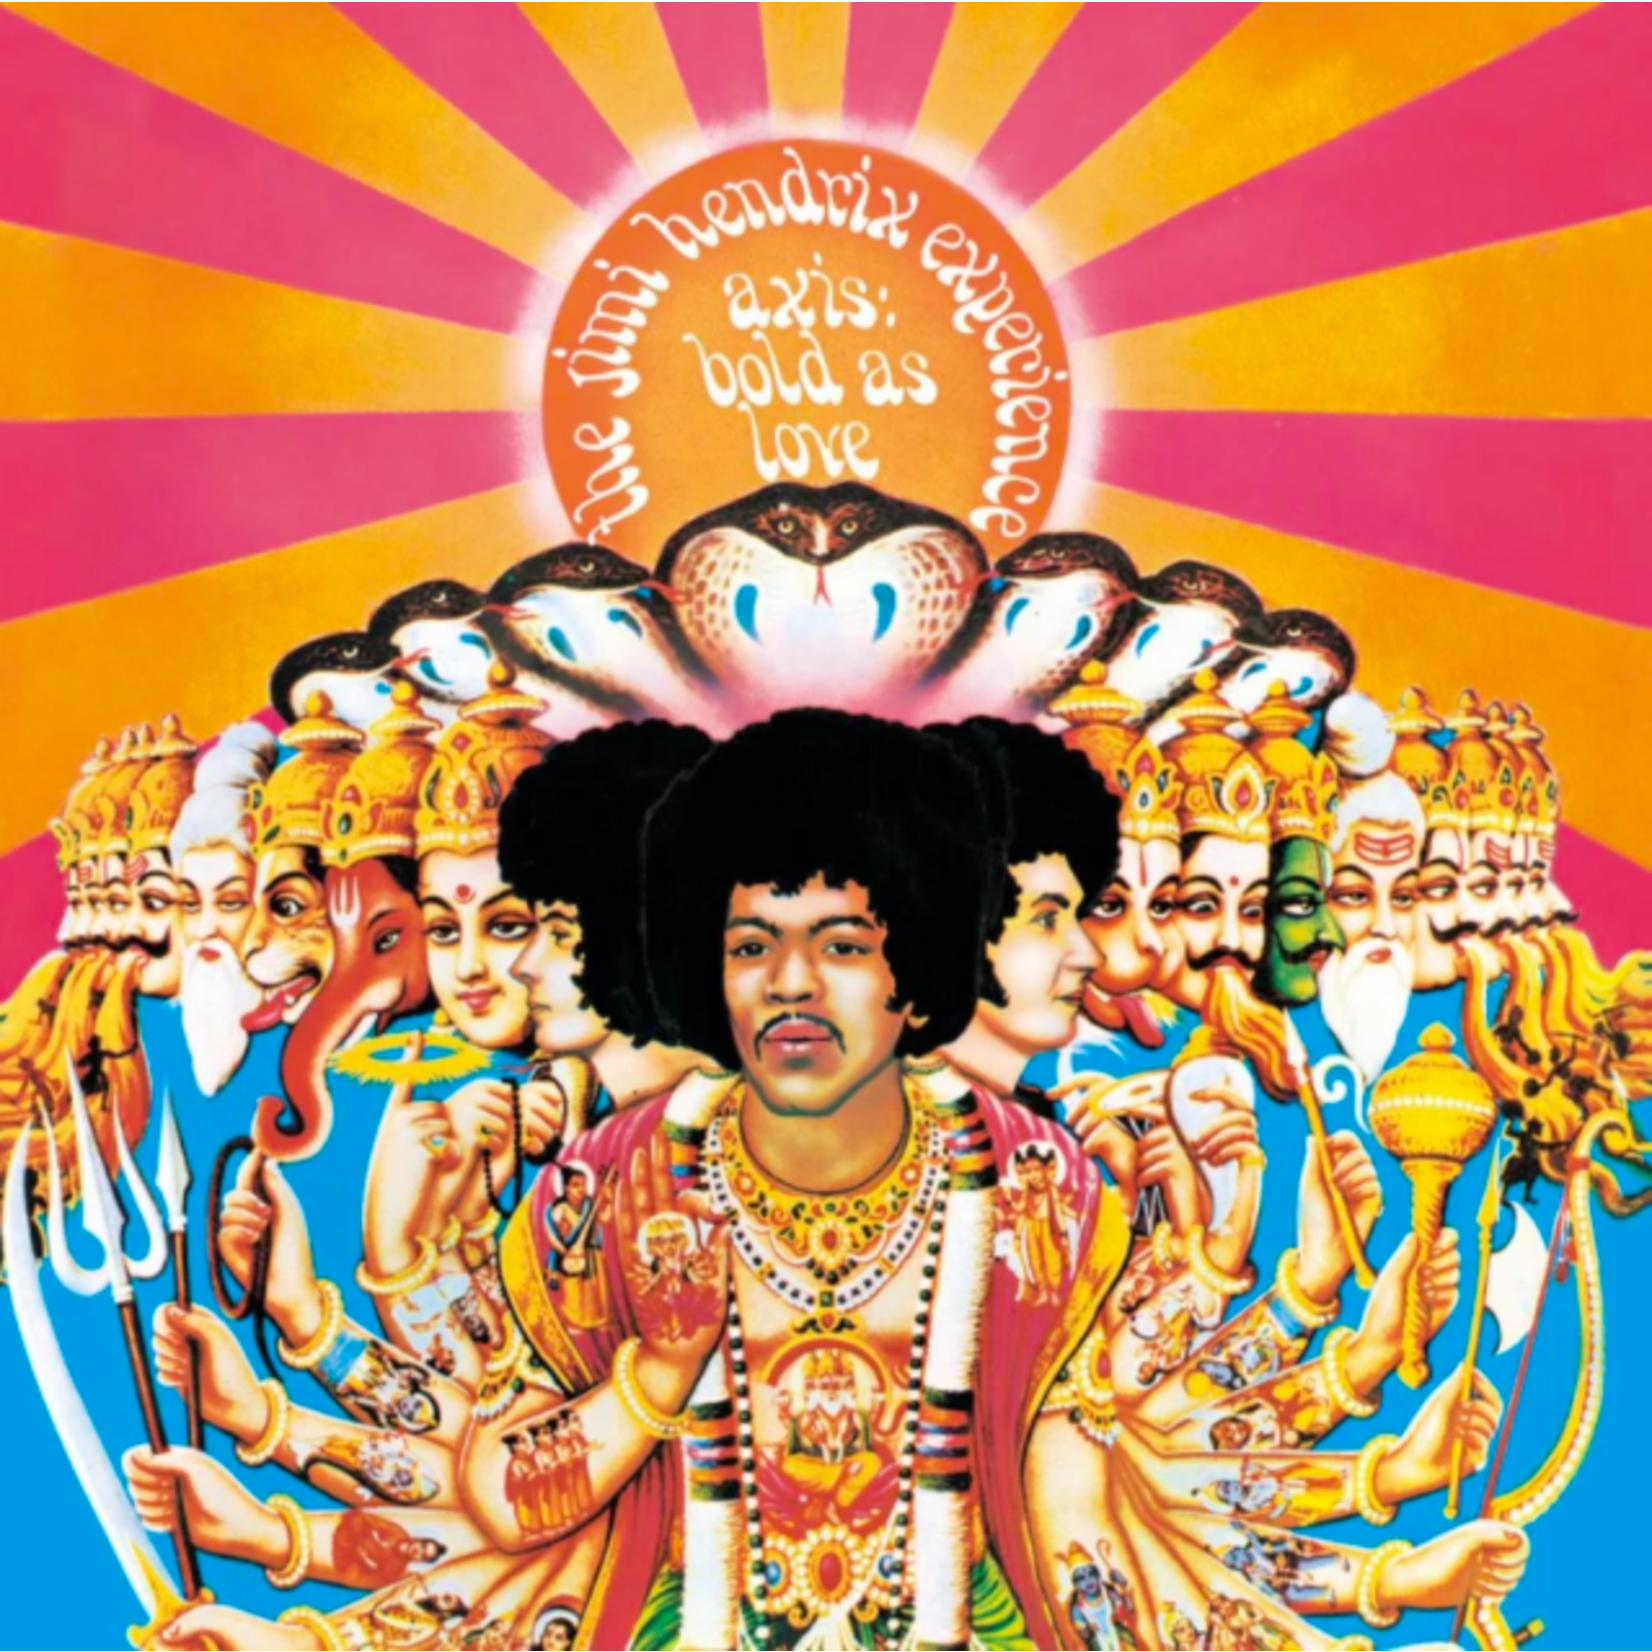 [New] Jimi Hendrix - Axis - Bold As Love (mono mix)